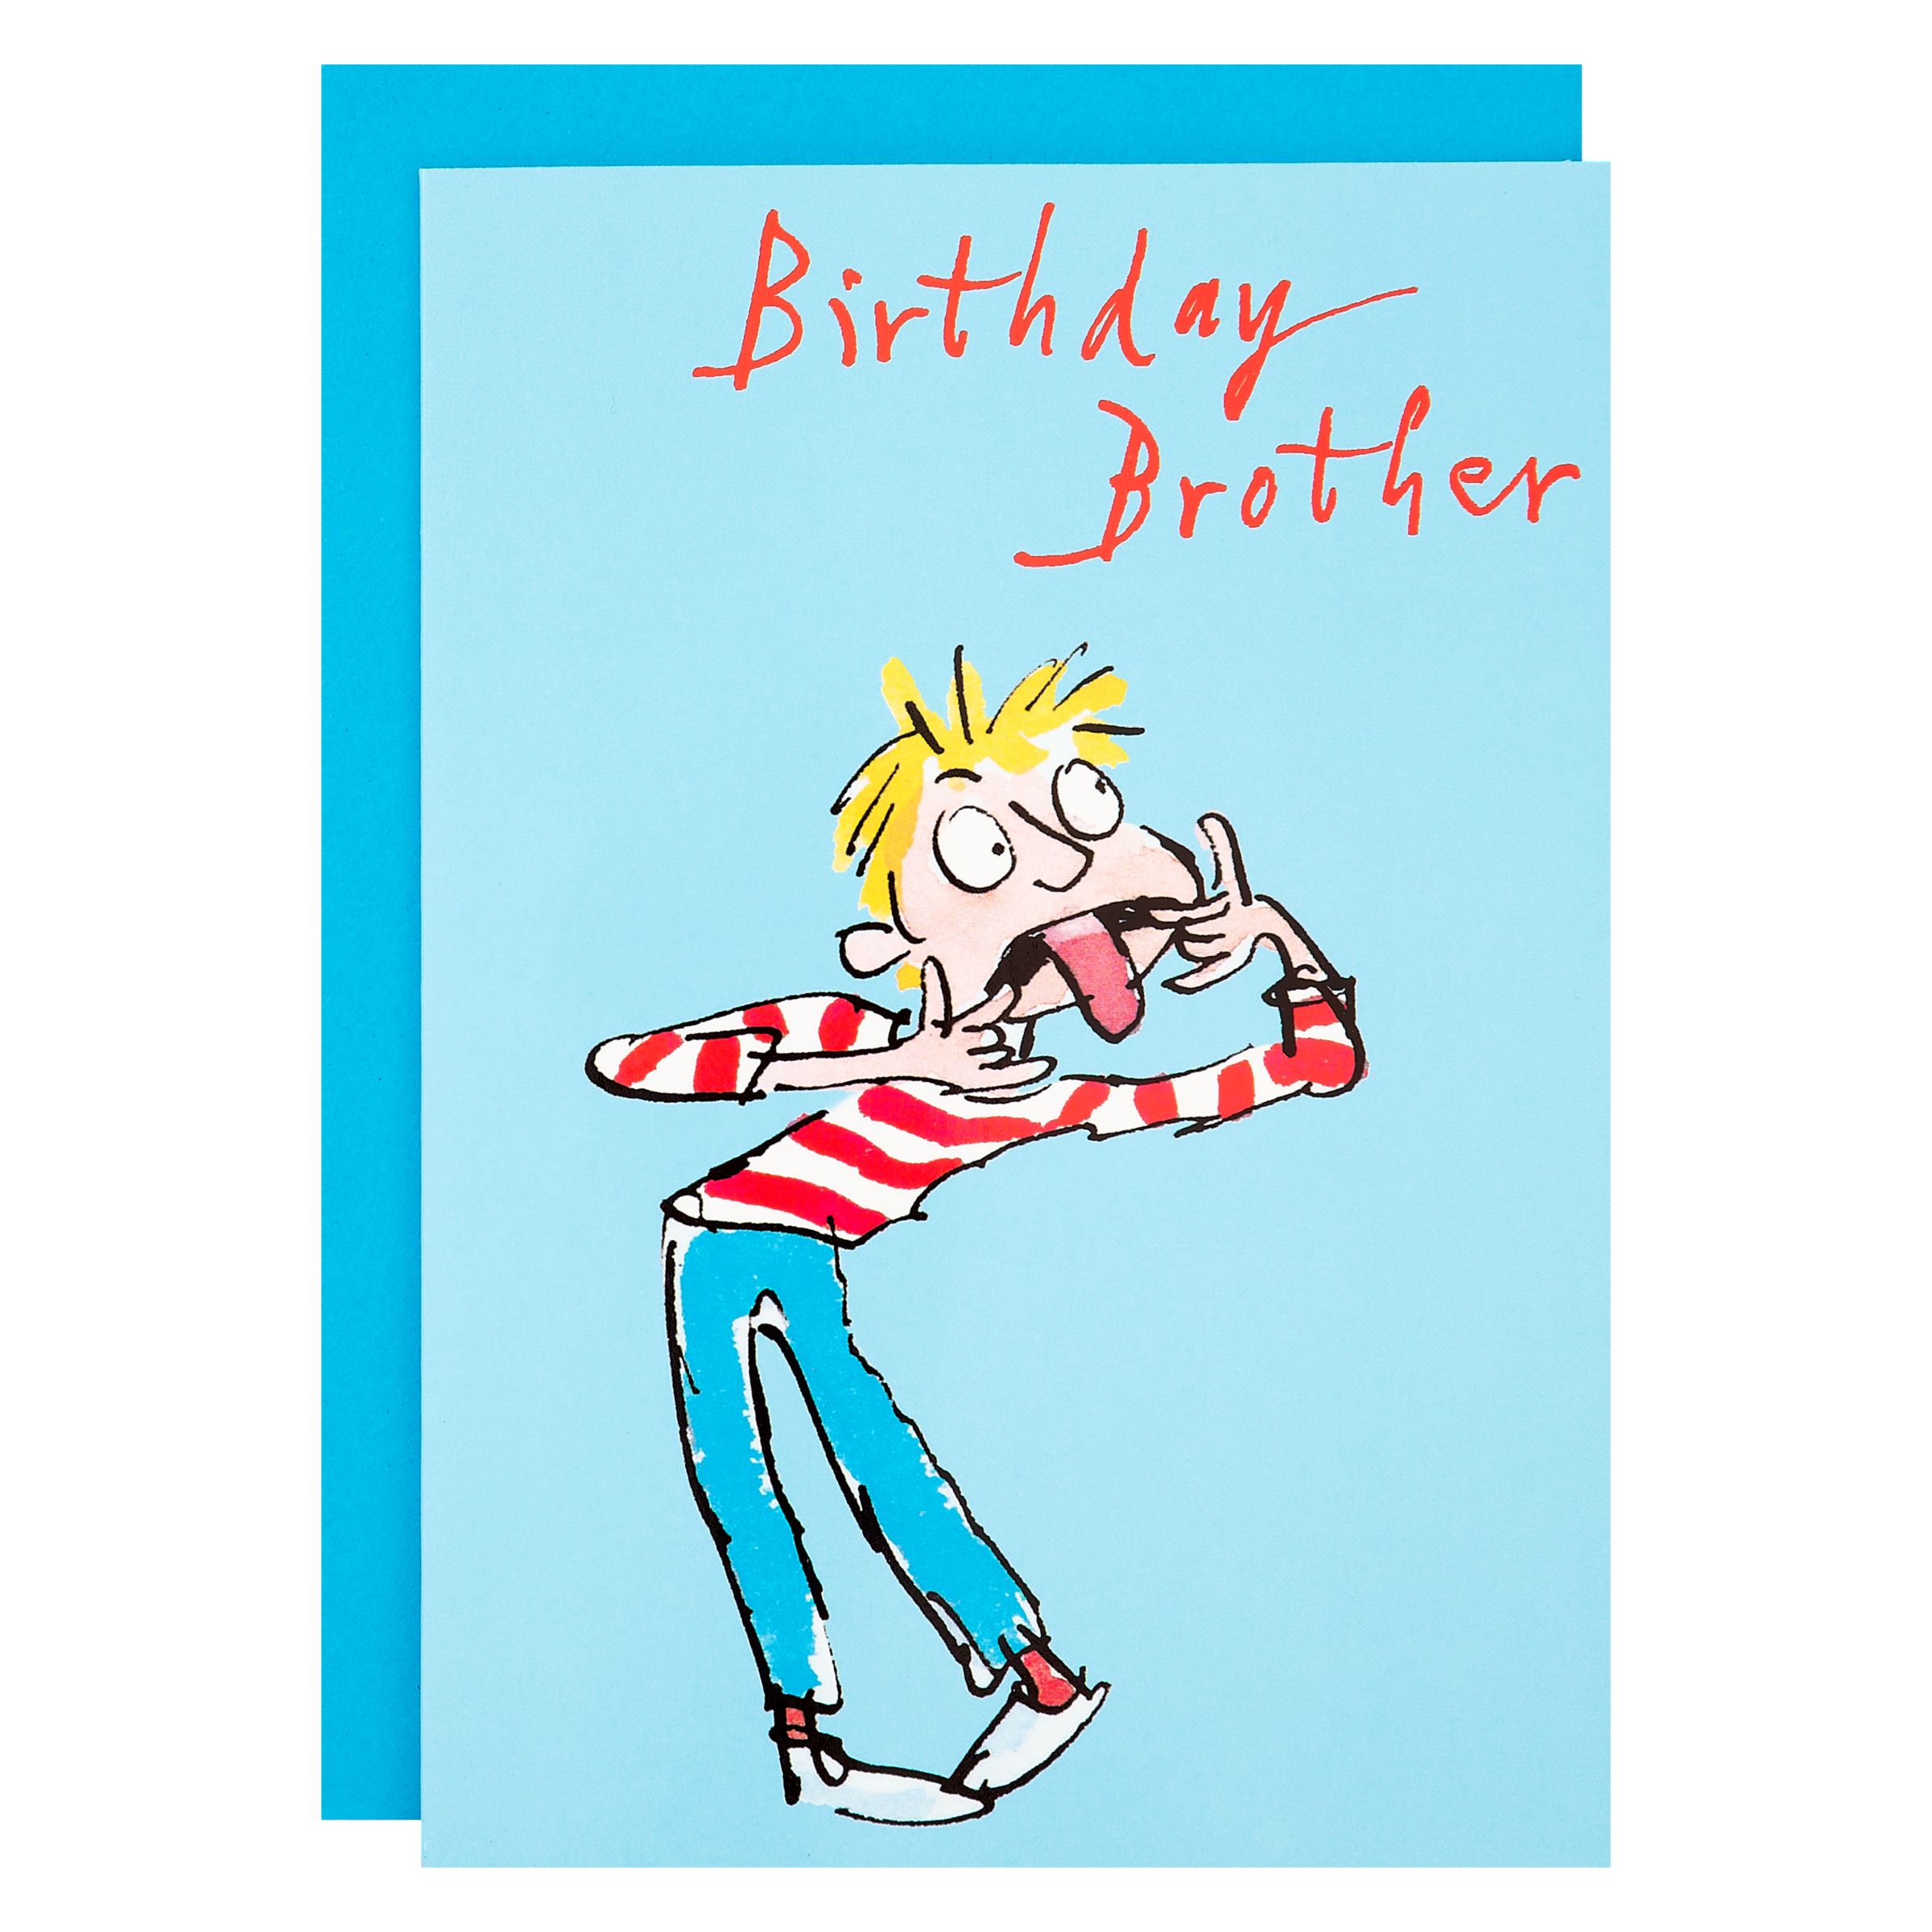 Woodmansterne Brother Birthday Card